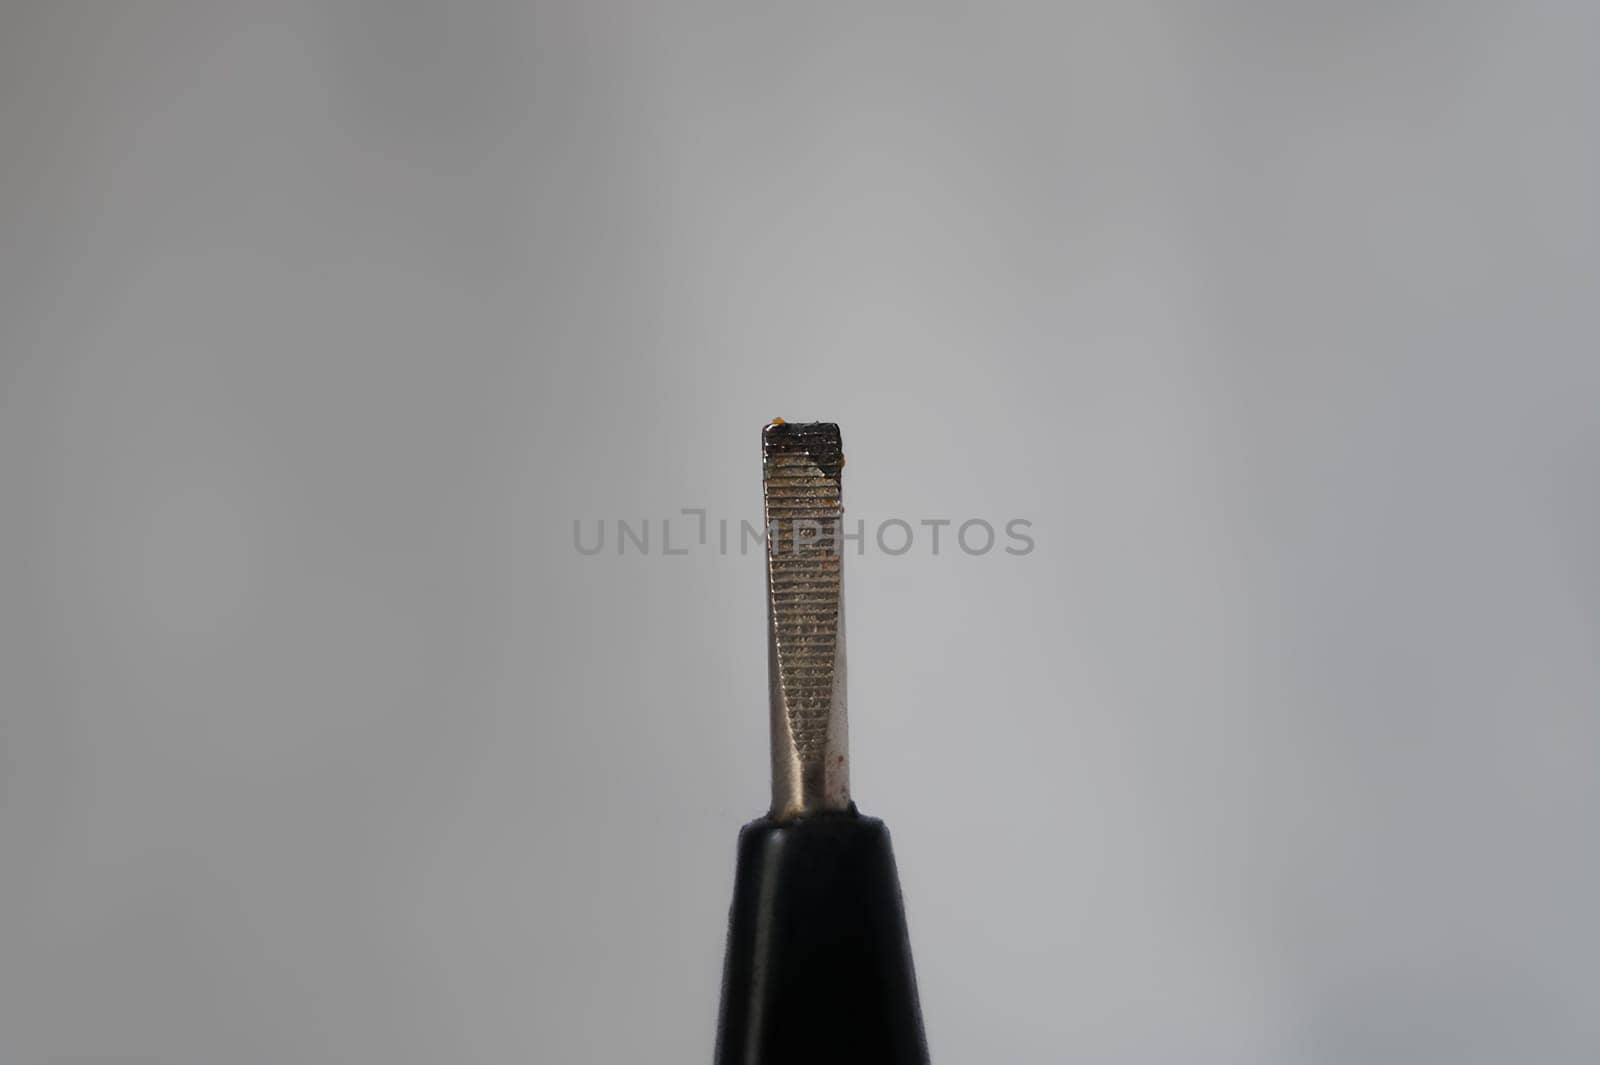 Close-Up of a Black-Handled Screwdriver. High quality photo